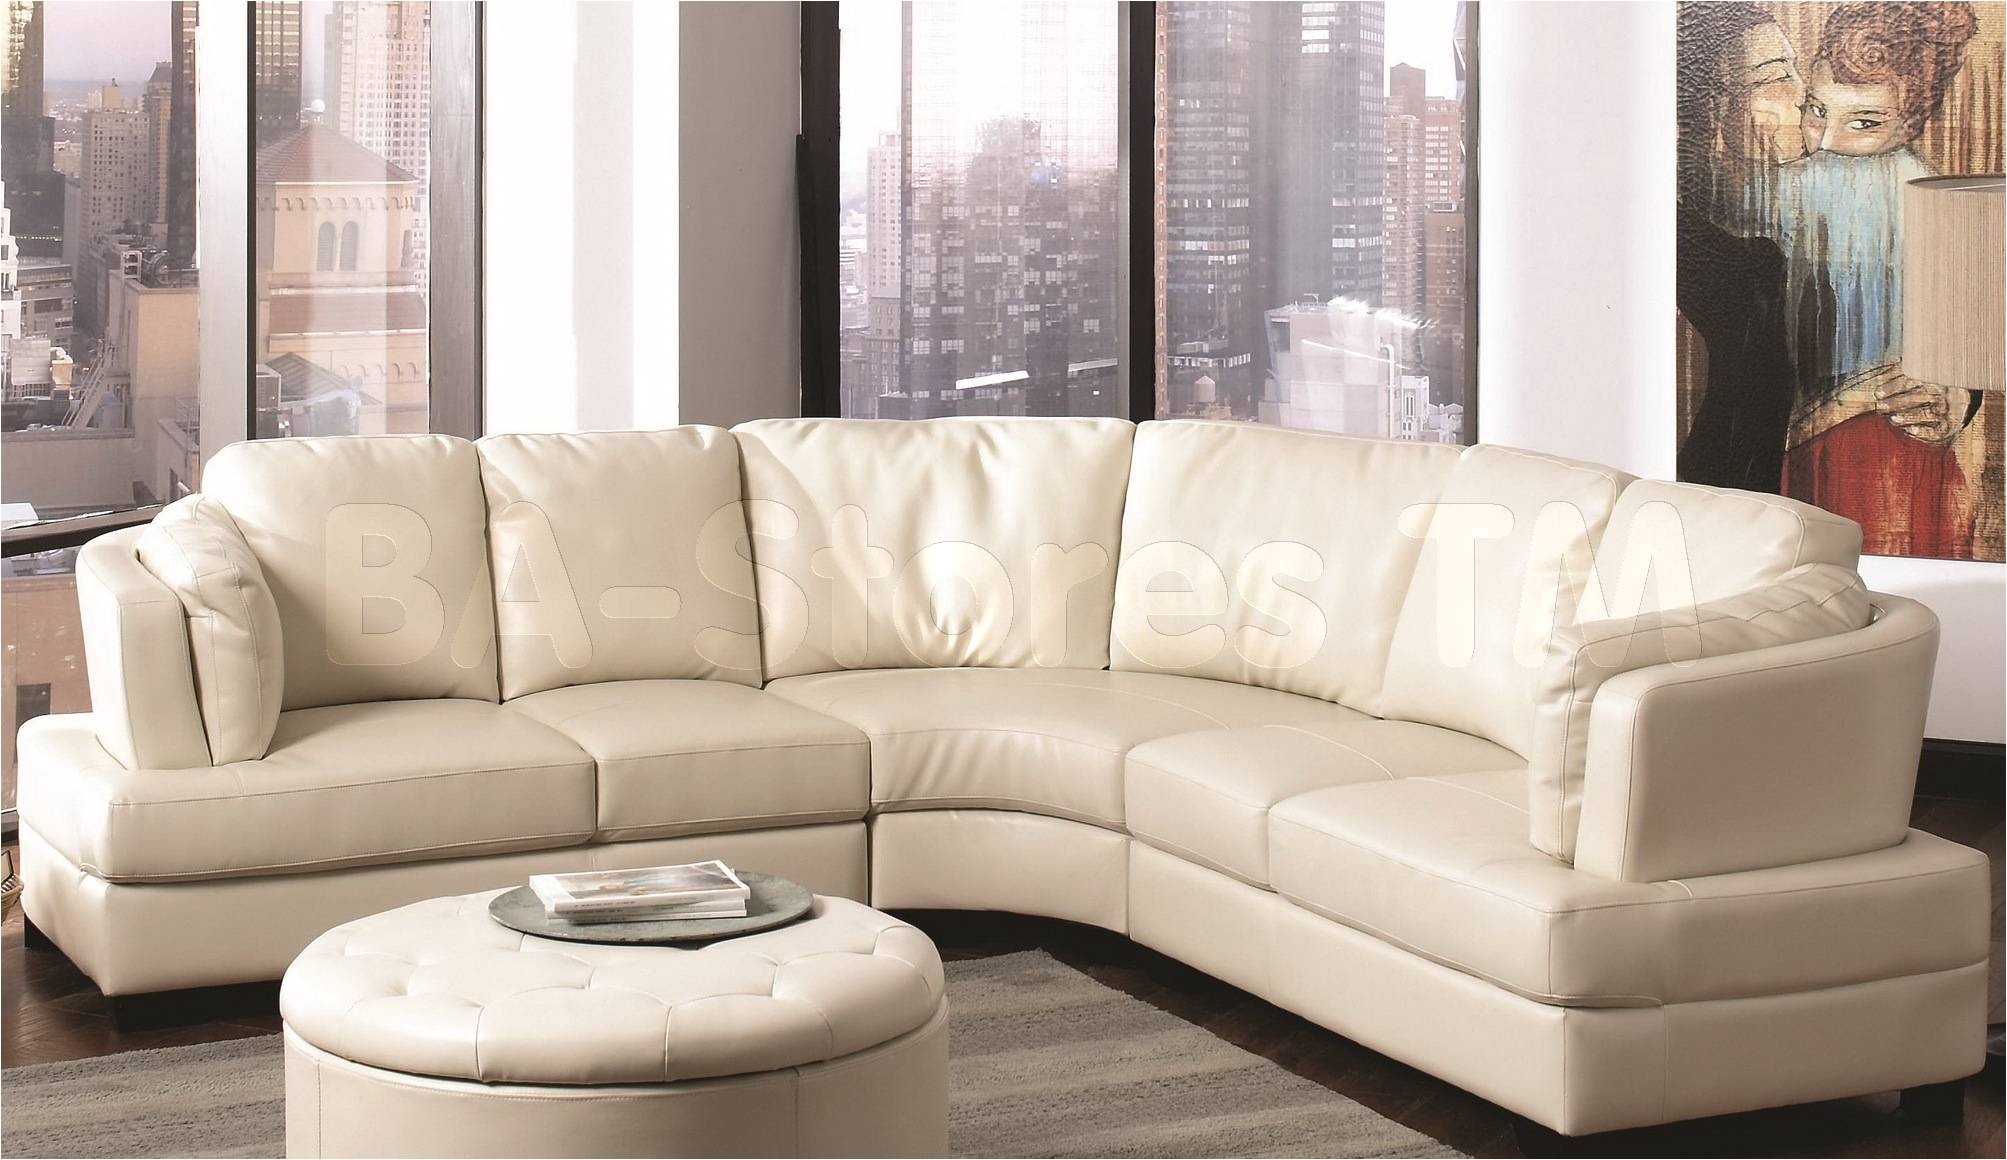 25 s macys leather sectional sofa